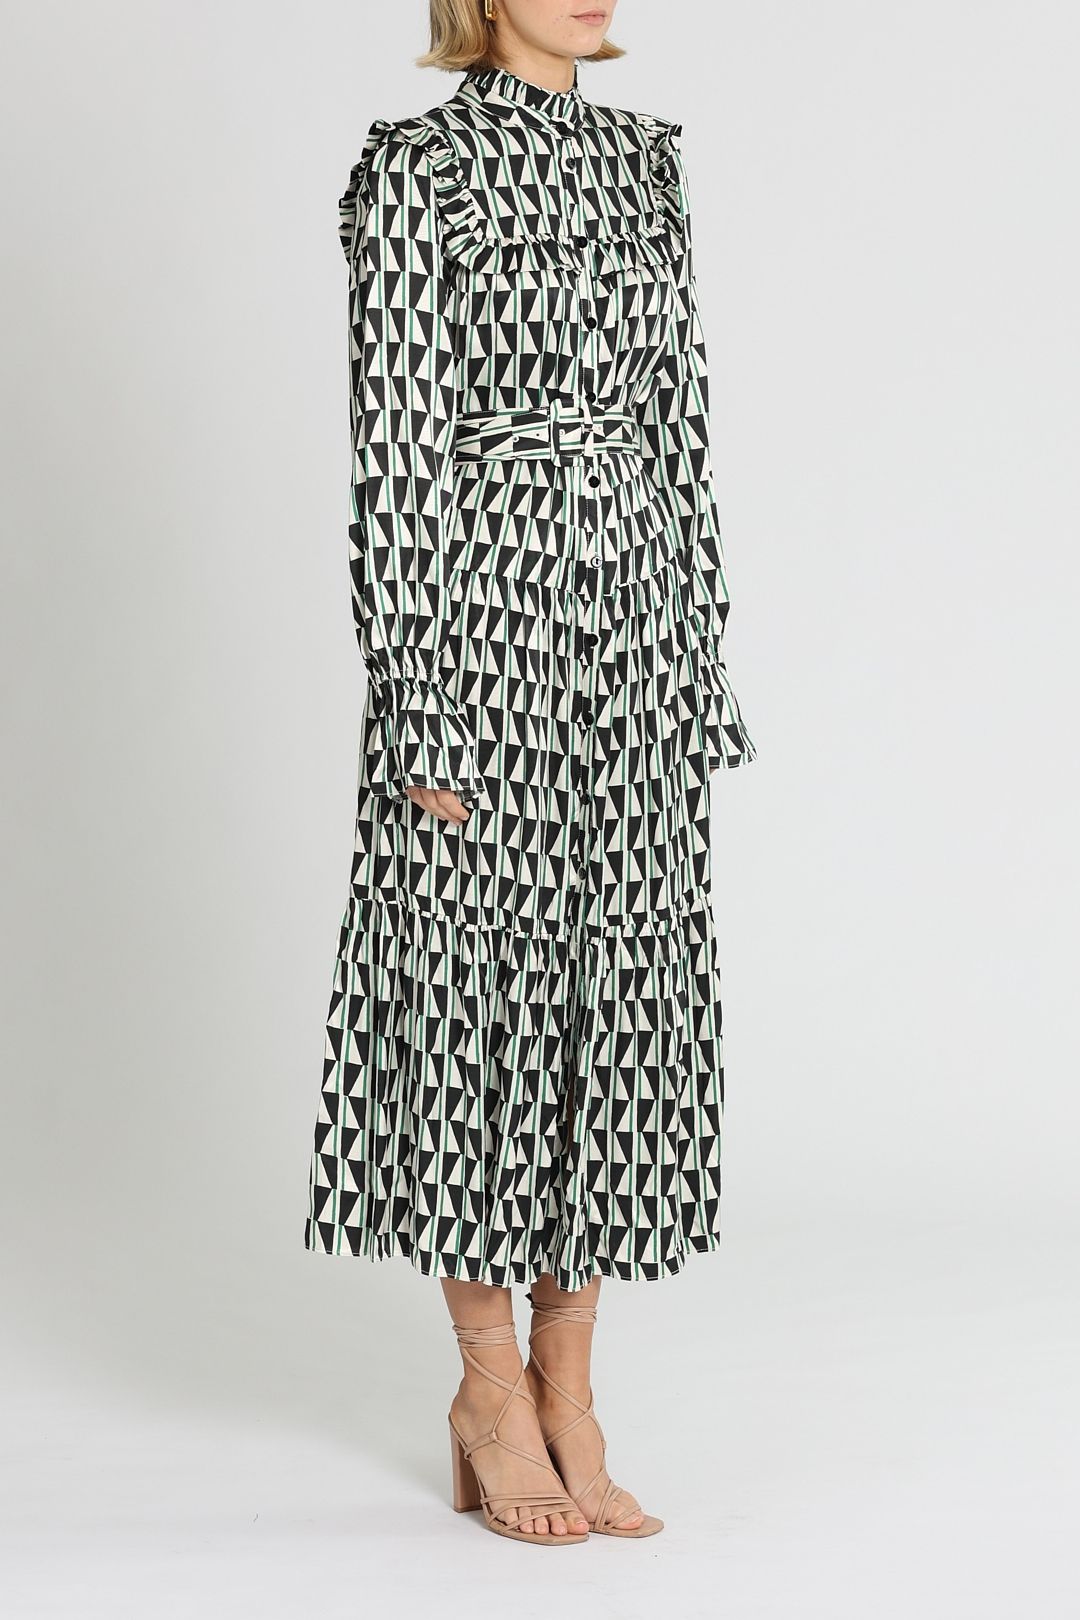 Kitri Mandy Green Tile Print Maxi Dress Long Sleeves